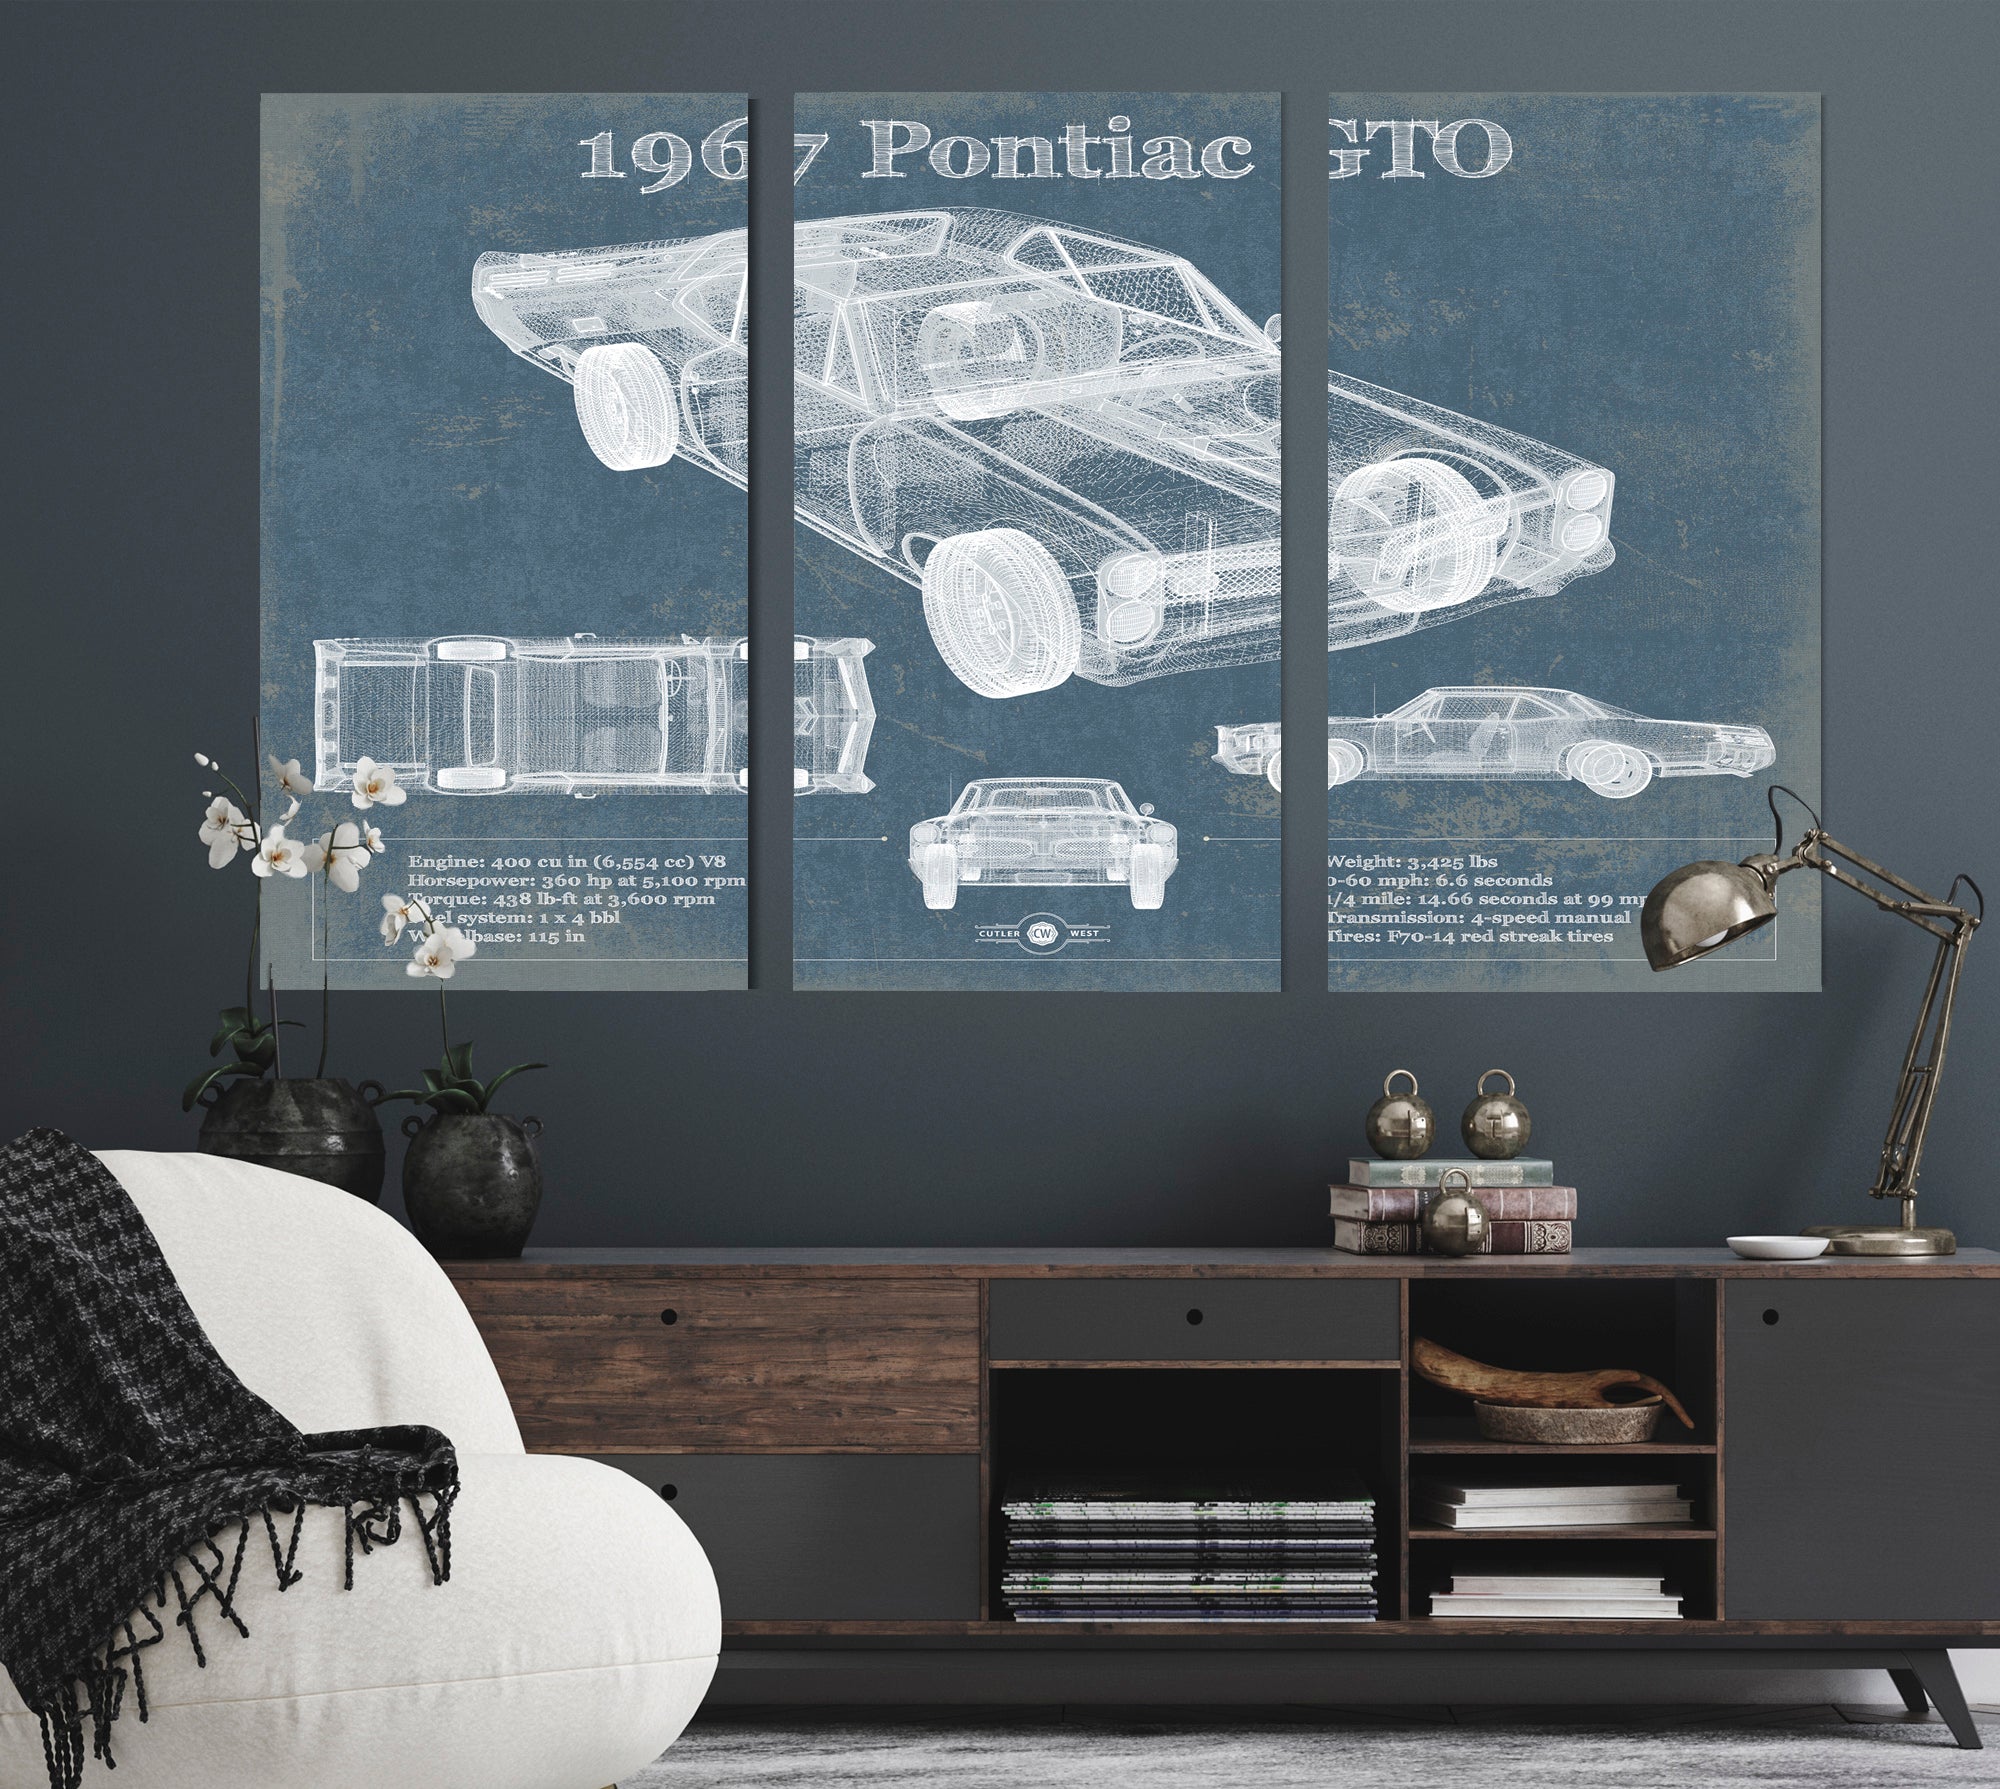 1967 Pontiac GTO Vintage Auto Print